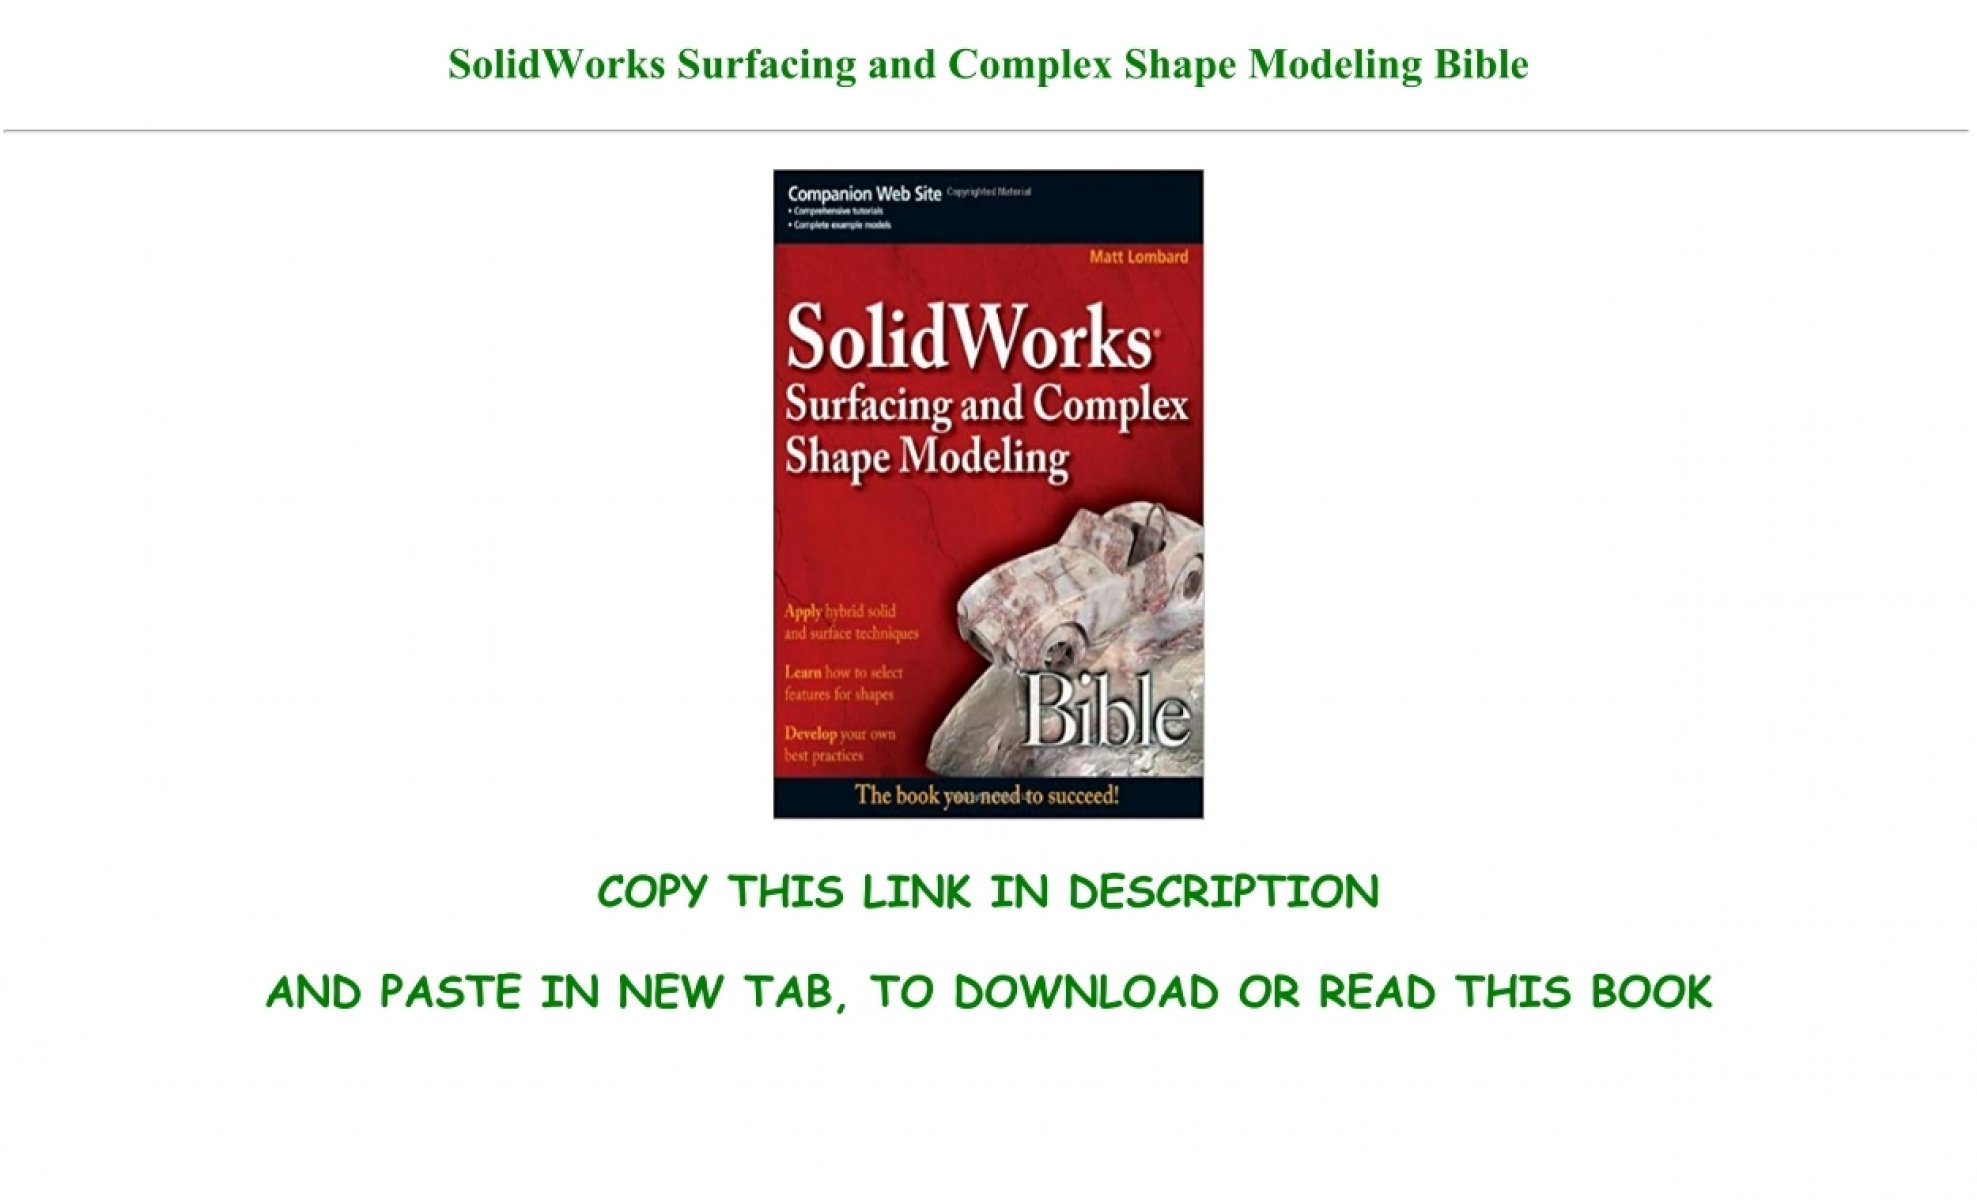 solidworks bible pdf free download